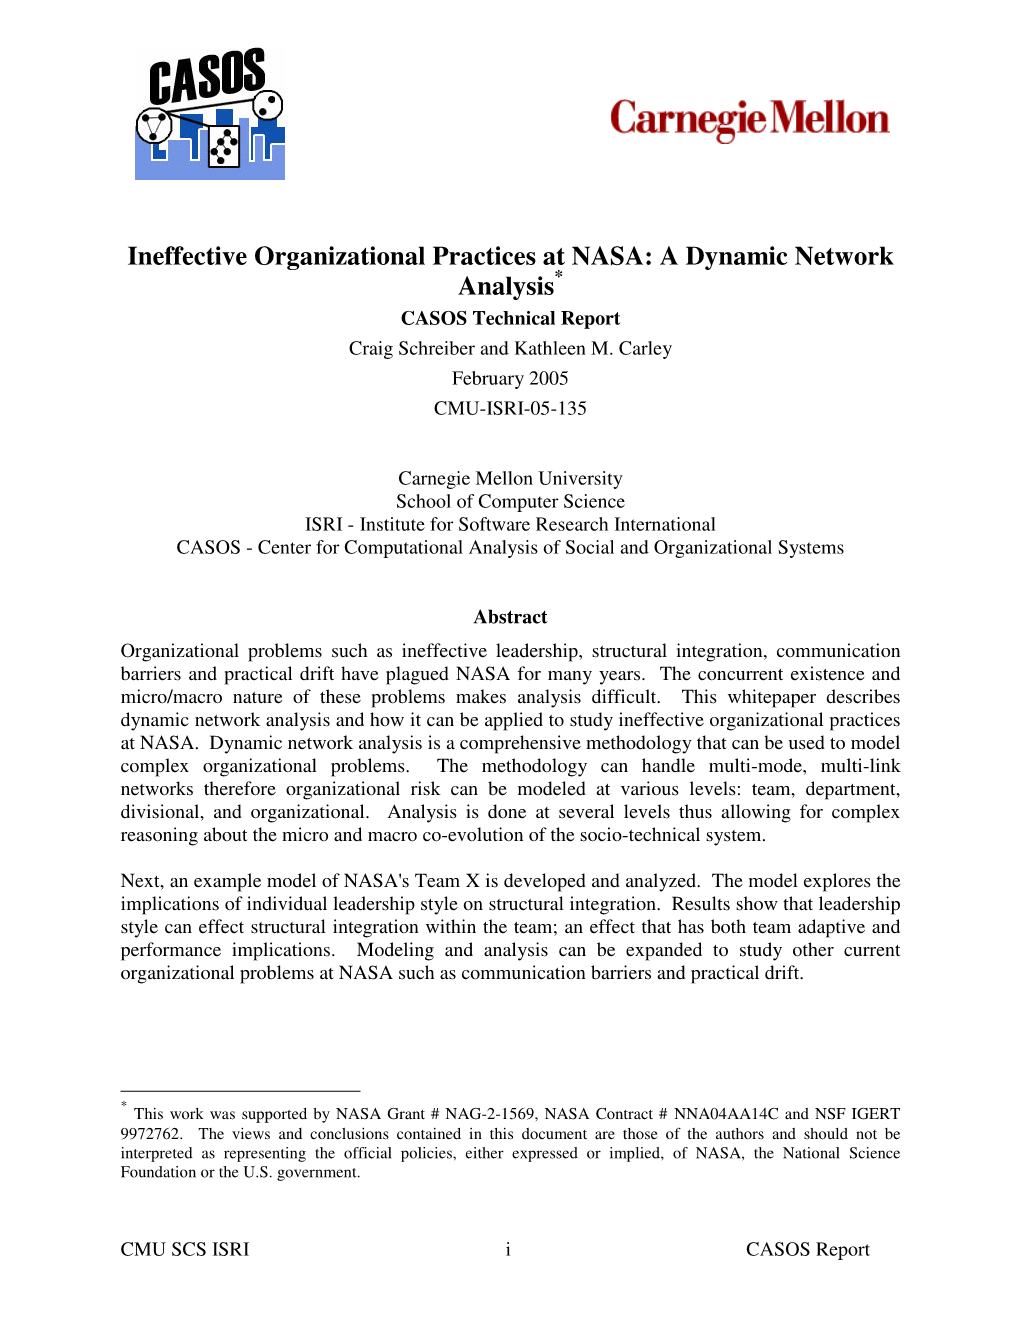 Ineffective Organizational Practices at NASA: a Dynamic Network Analysis* CASOS Technical Report Craig Schreiber and Kathleen M